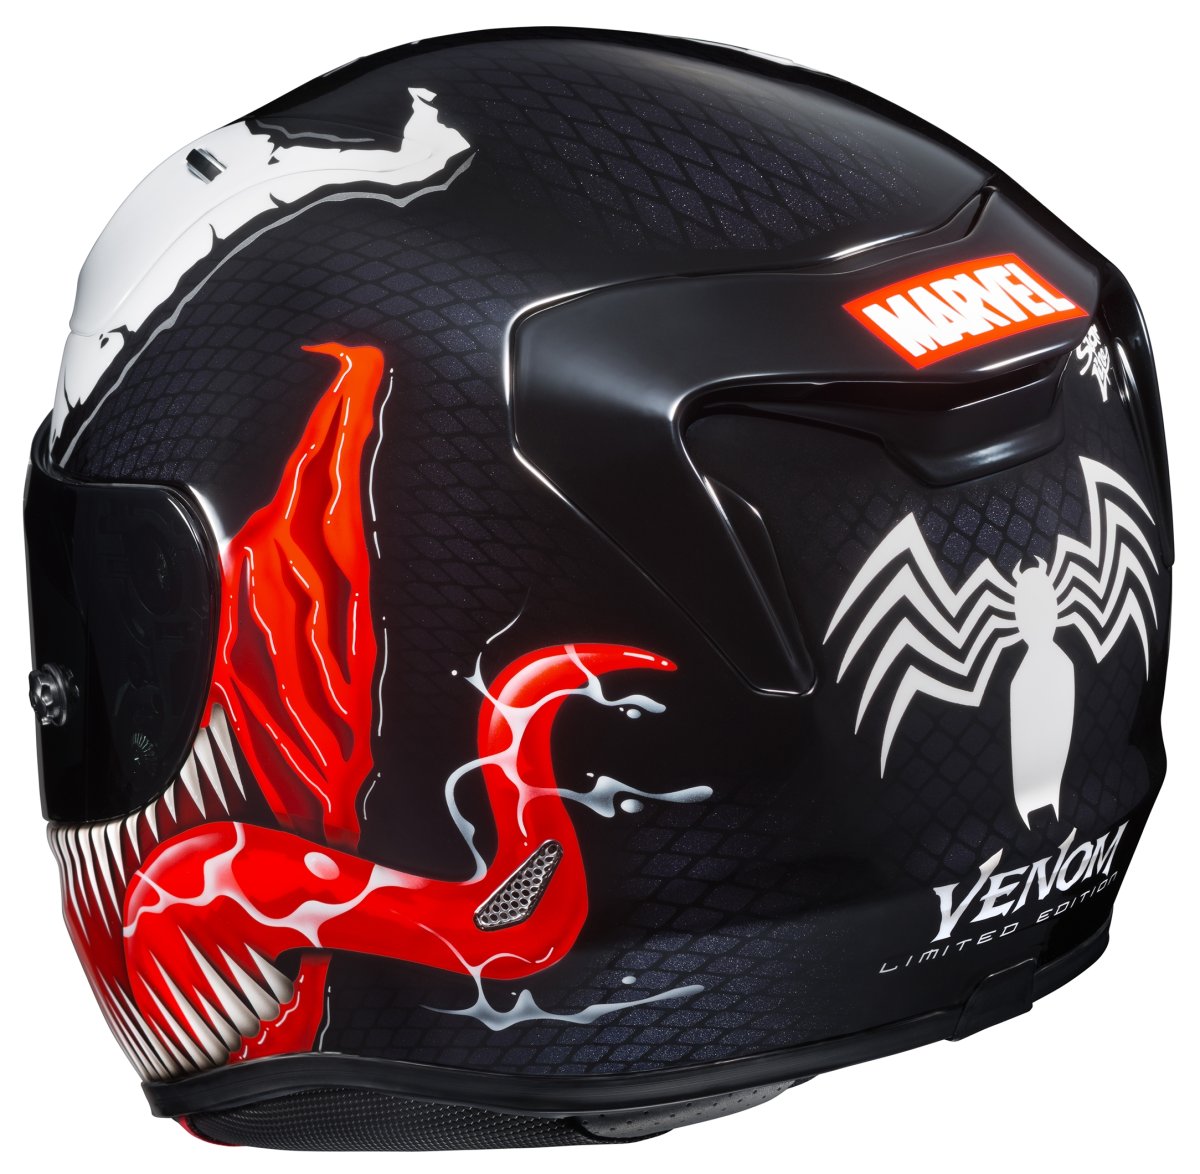 HJC шлем RPHA 11 Marvel mc1 Venom 2